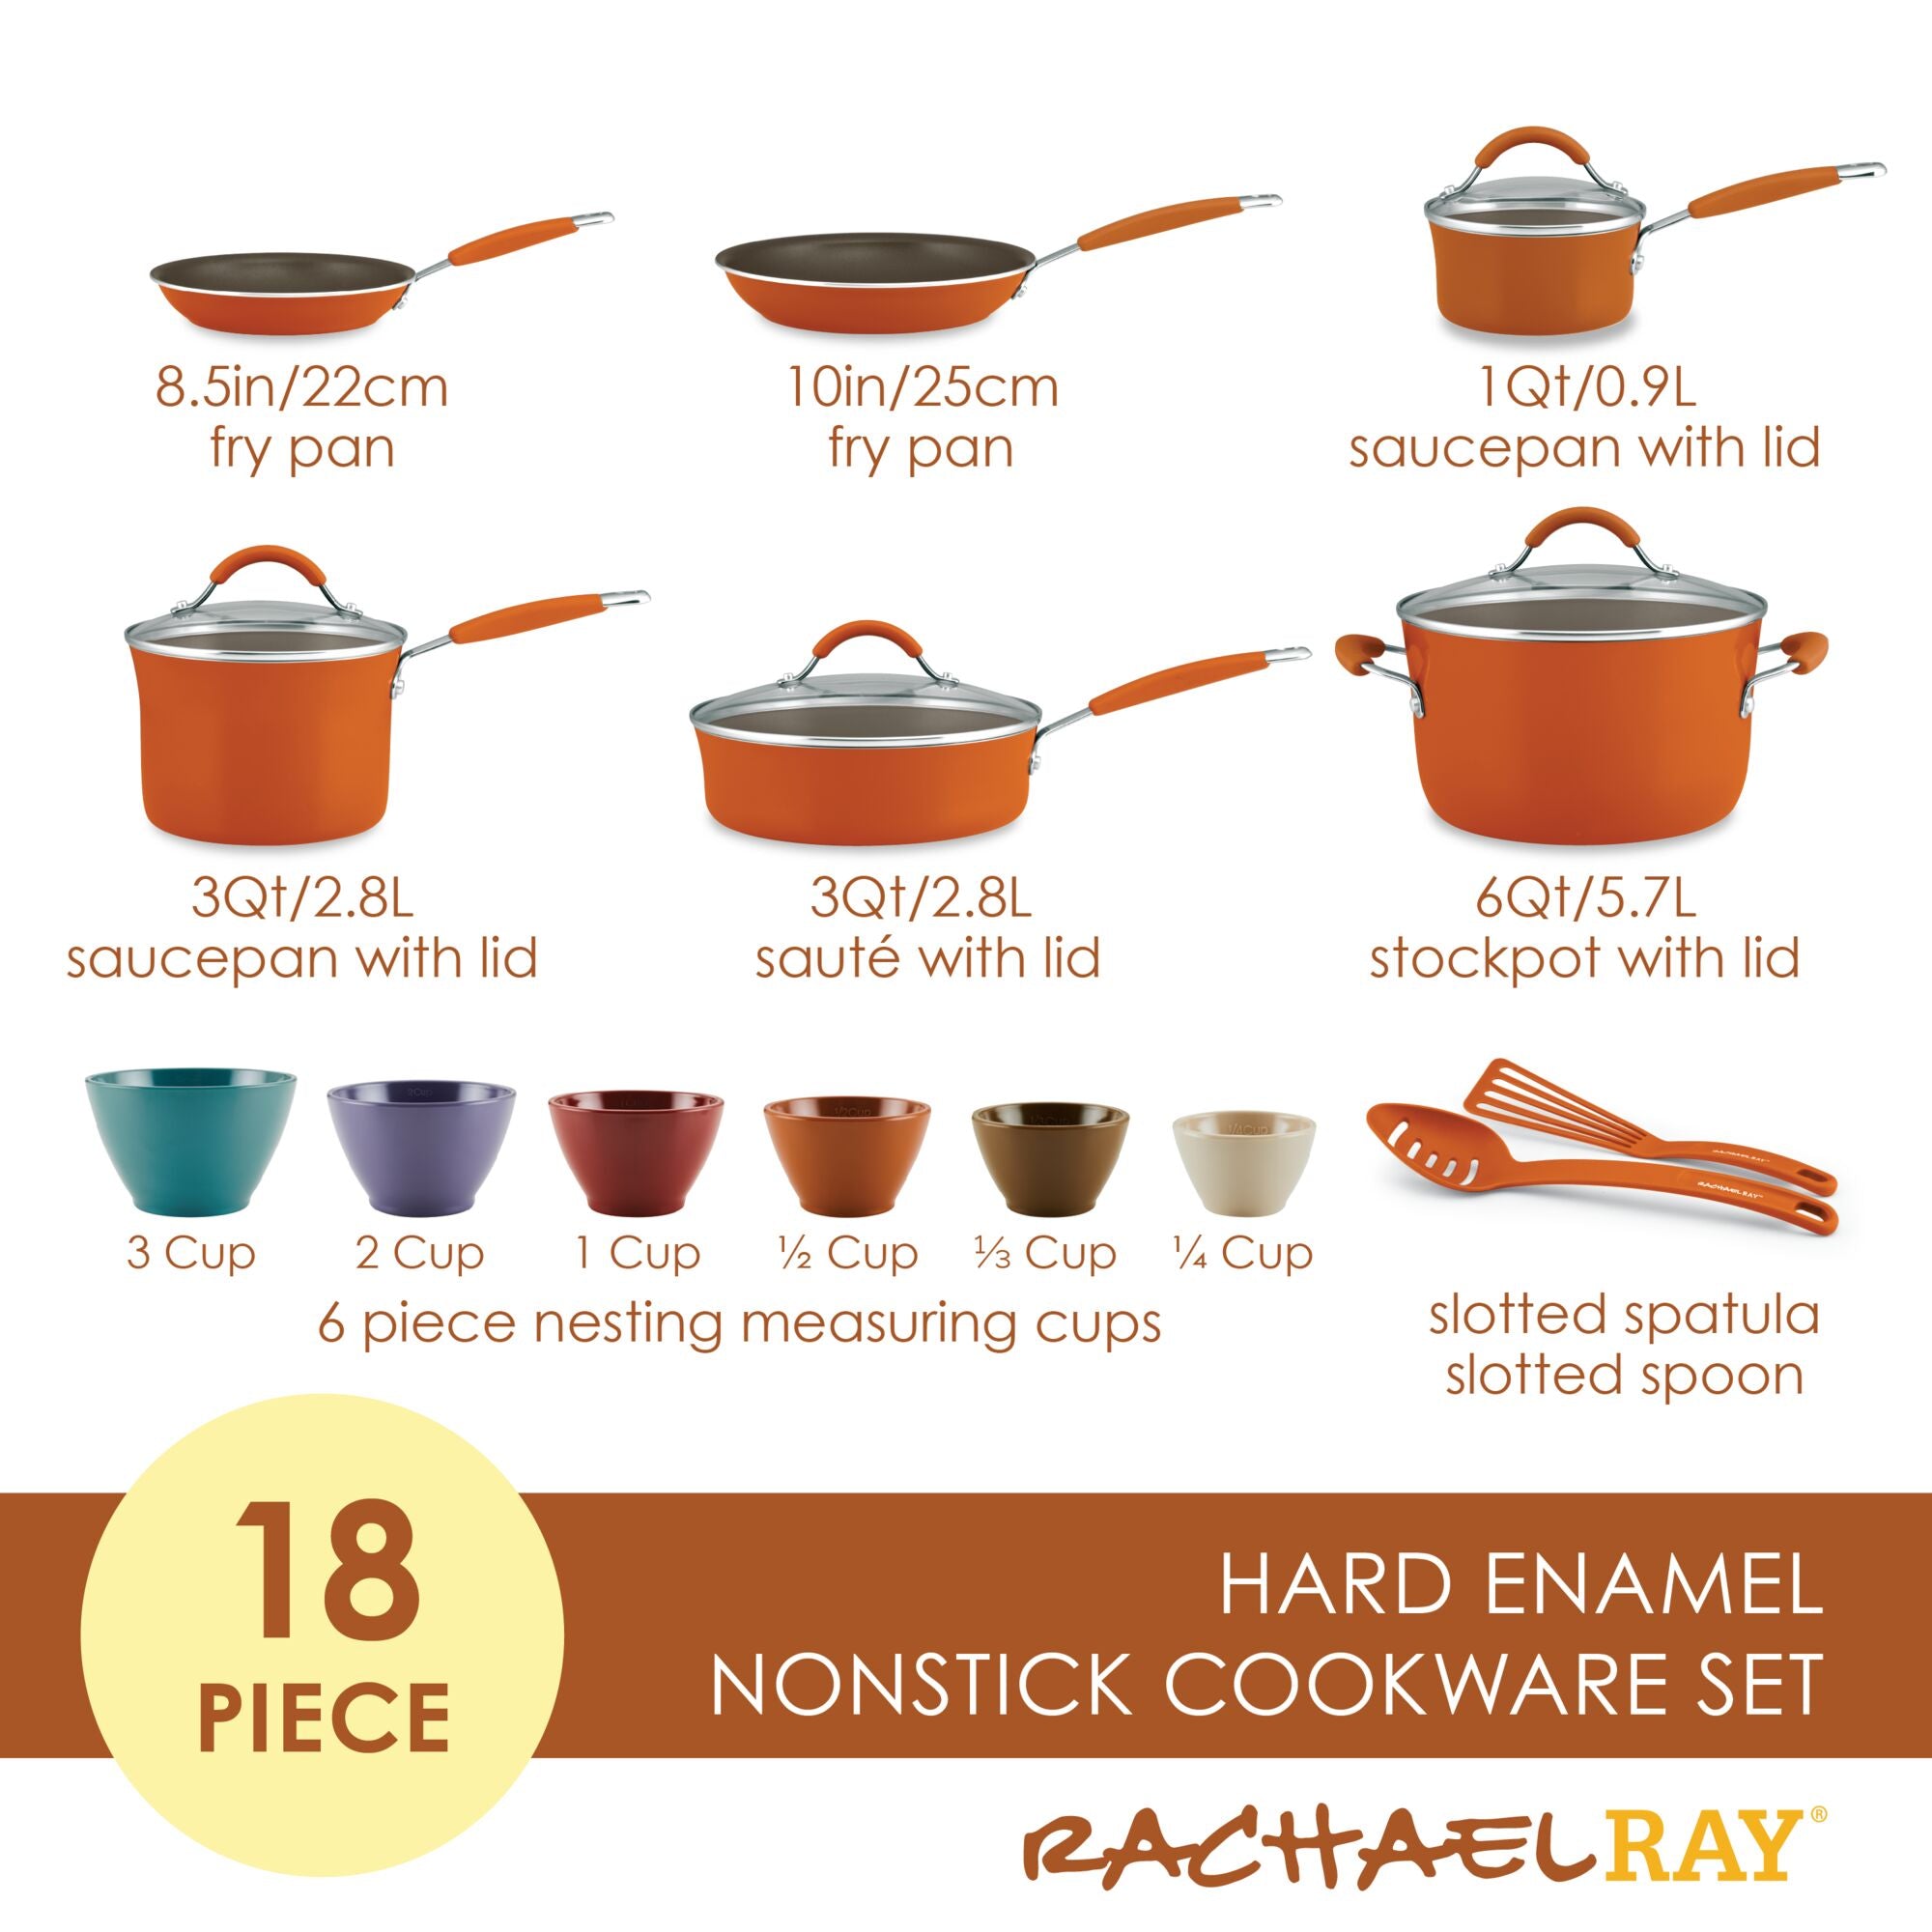 Rachael Ray Hard-Anodized 10 Piece Cookware Set, Orange - Macy's